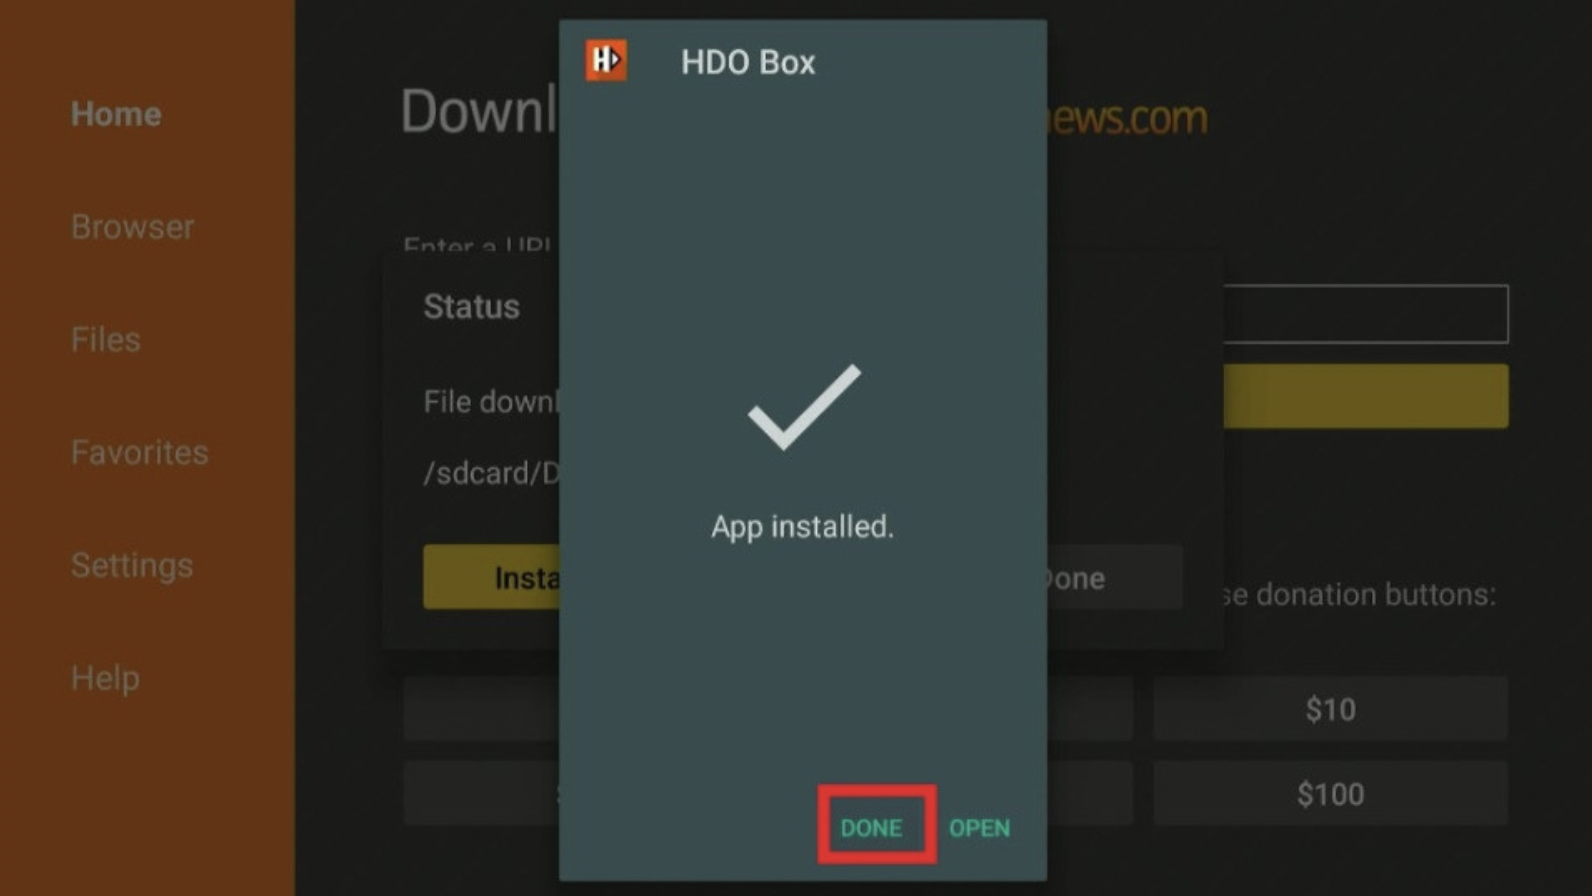 HDO Box APK Installed on FireStick - STEPS